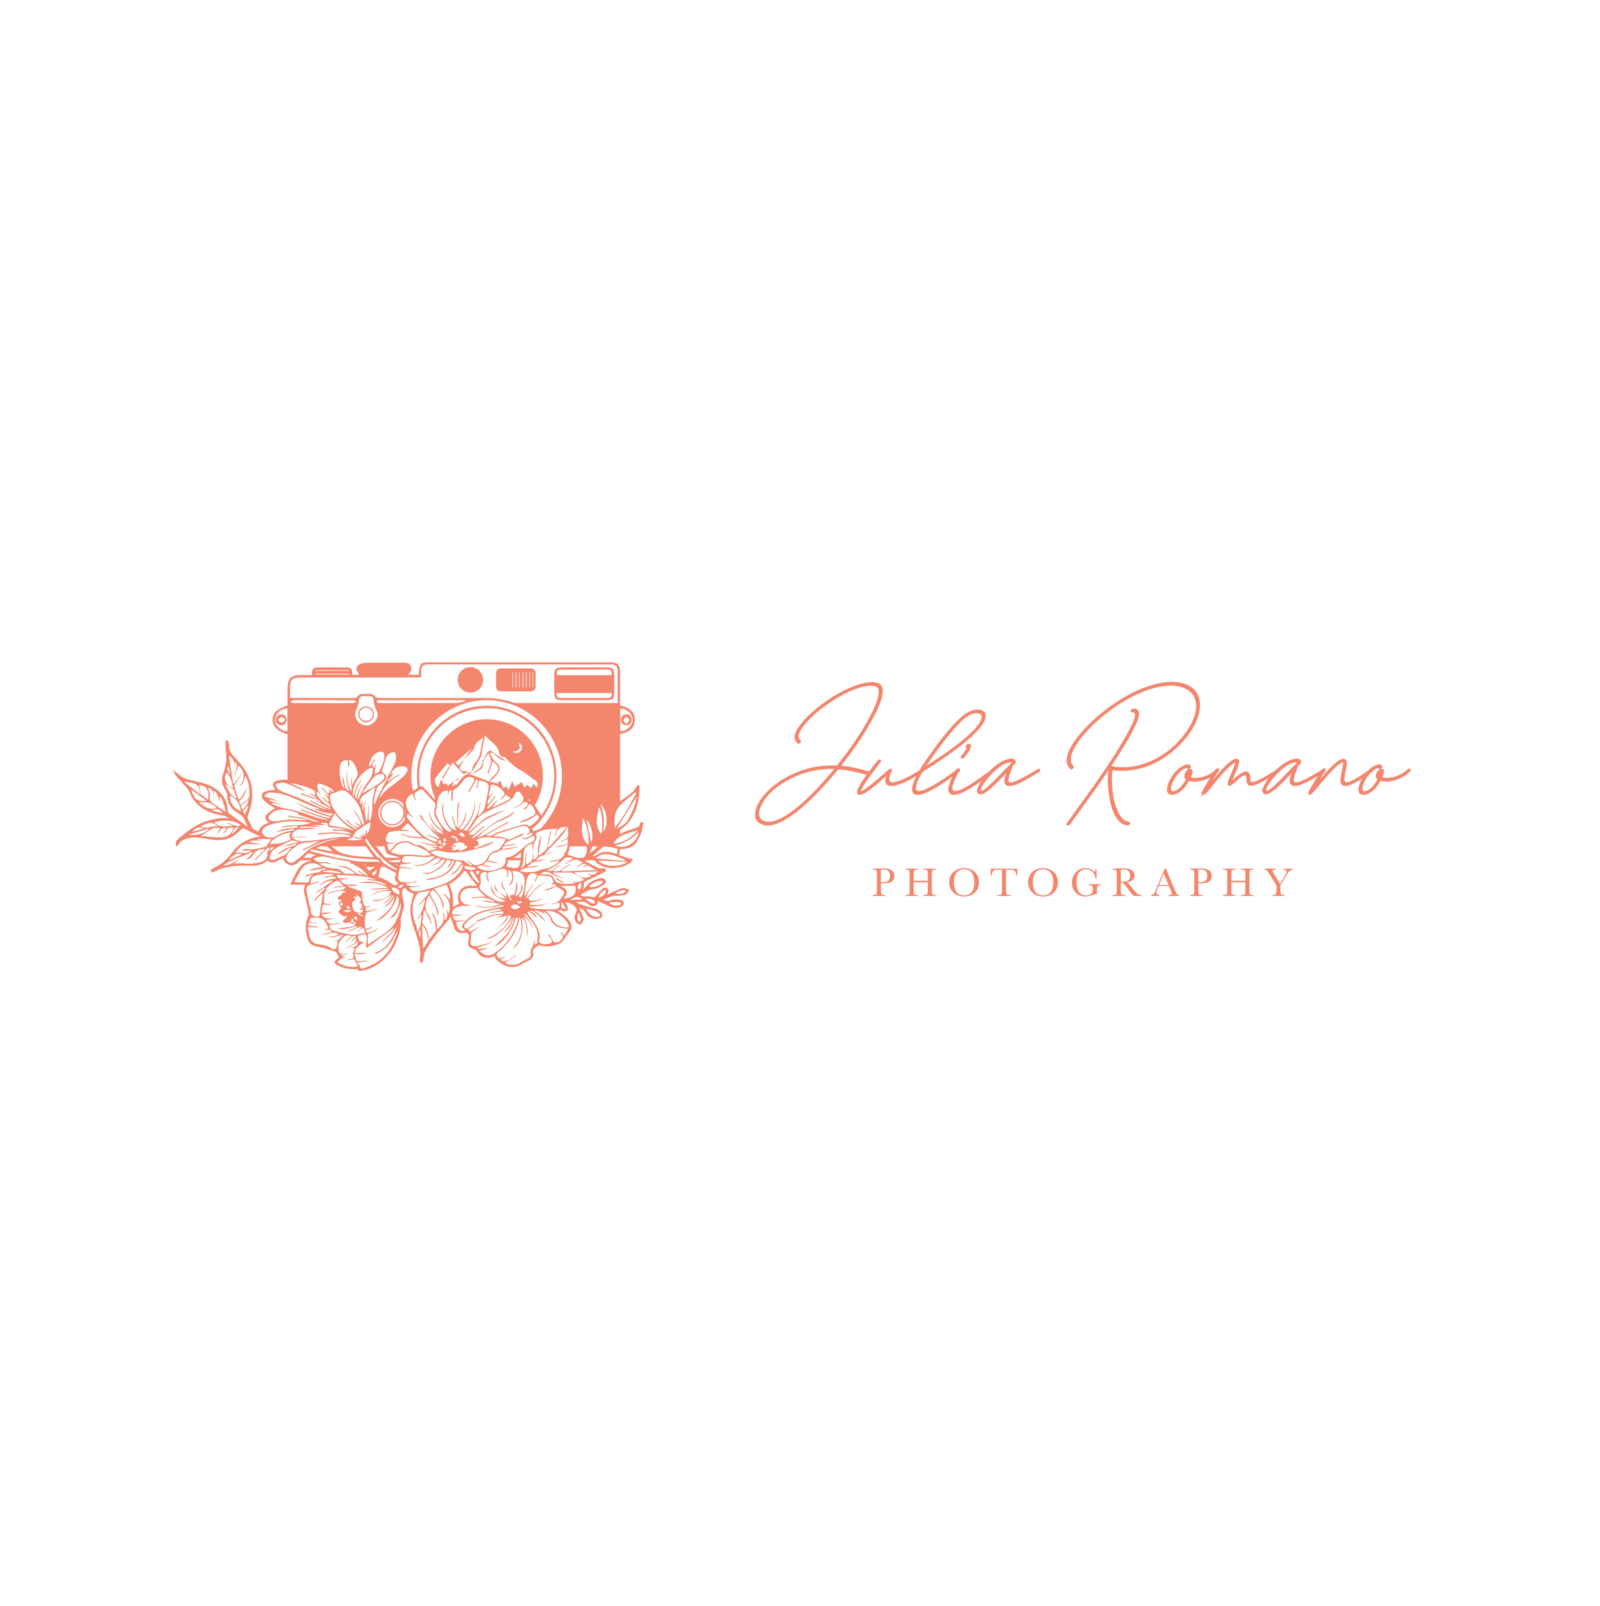 Julia Romano Photography logo camera Flagstaff mountains san Francisco peaks flowers